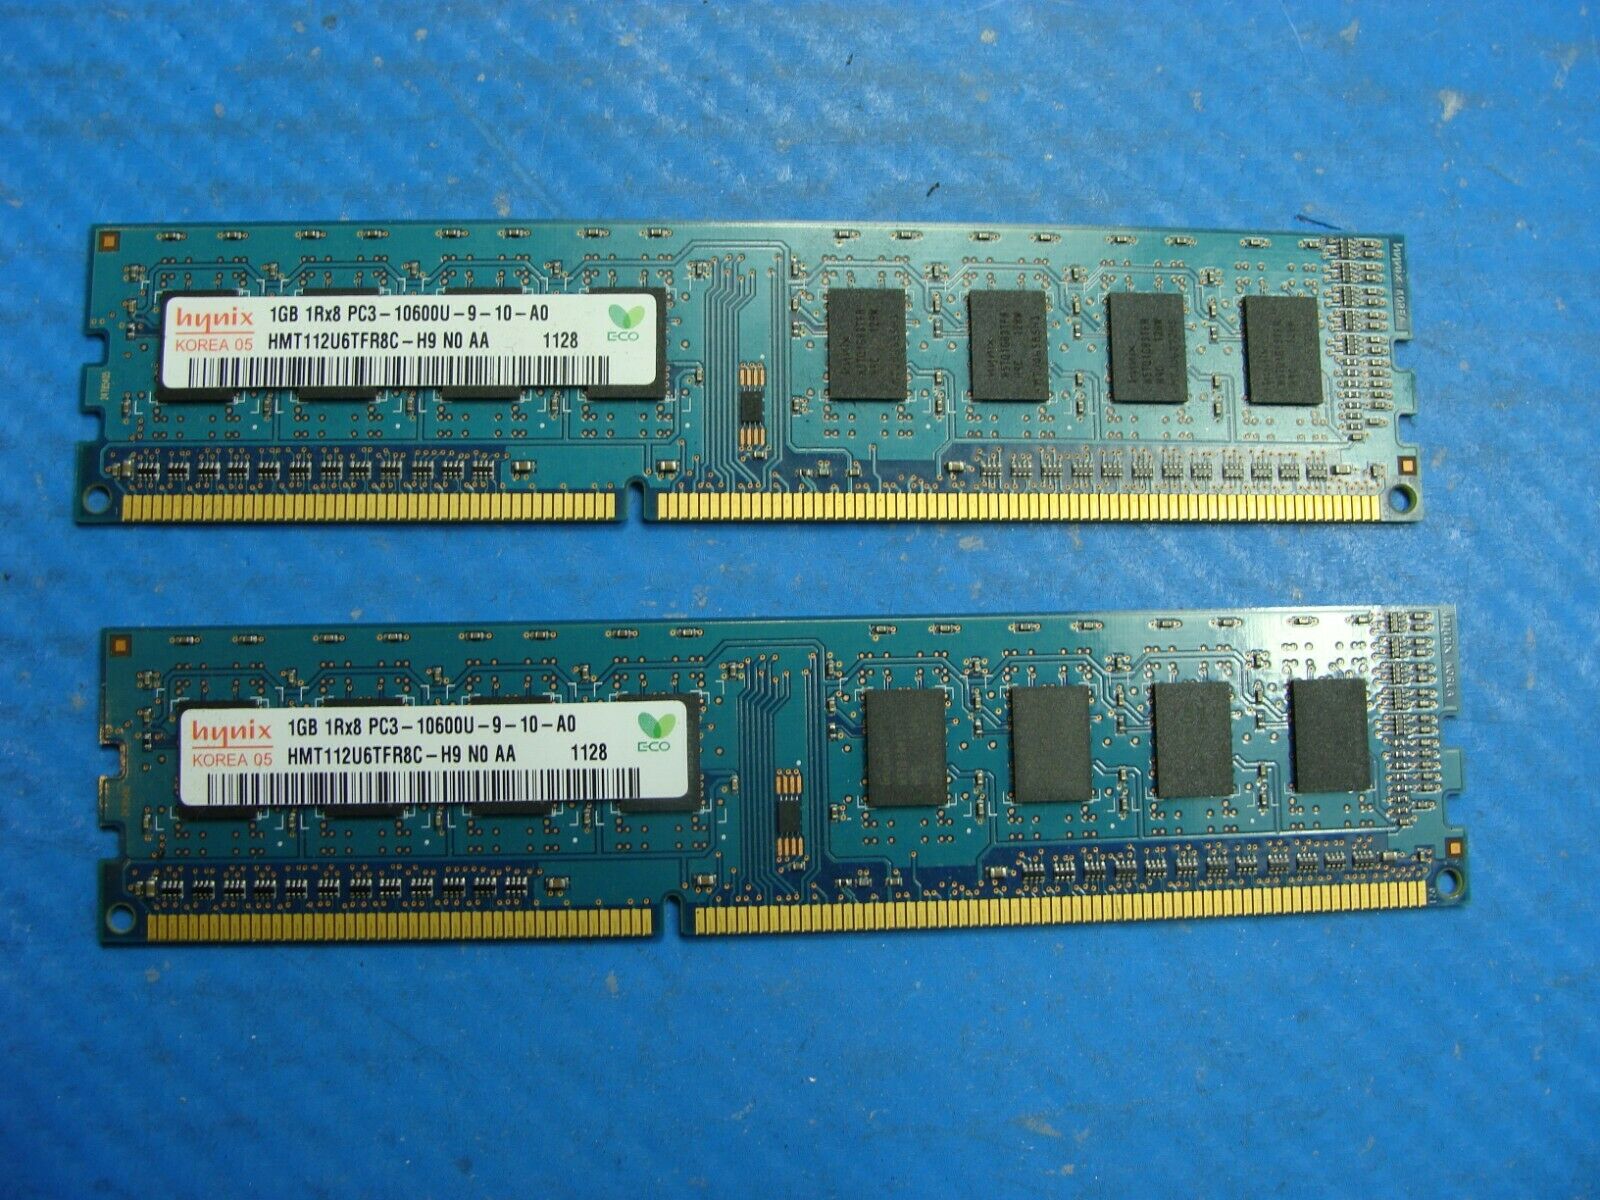 Dell XPS 8300 Hynix SO-DIMM RAM Memory Kit 2x1GB PC3-10600U HMT112U6TFR8C-H9 Hynix